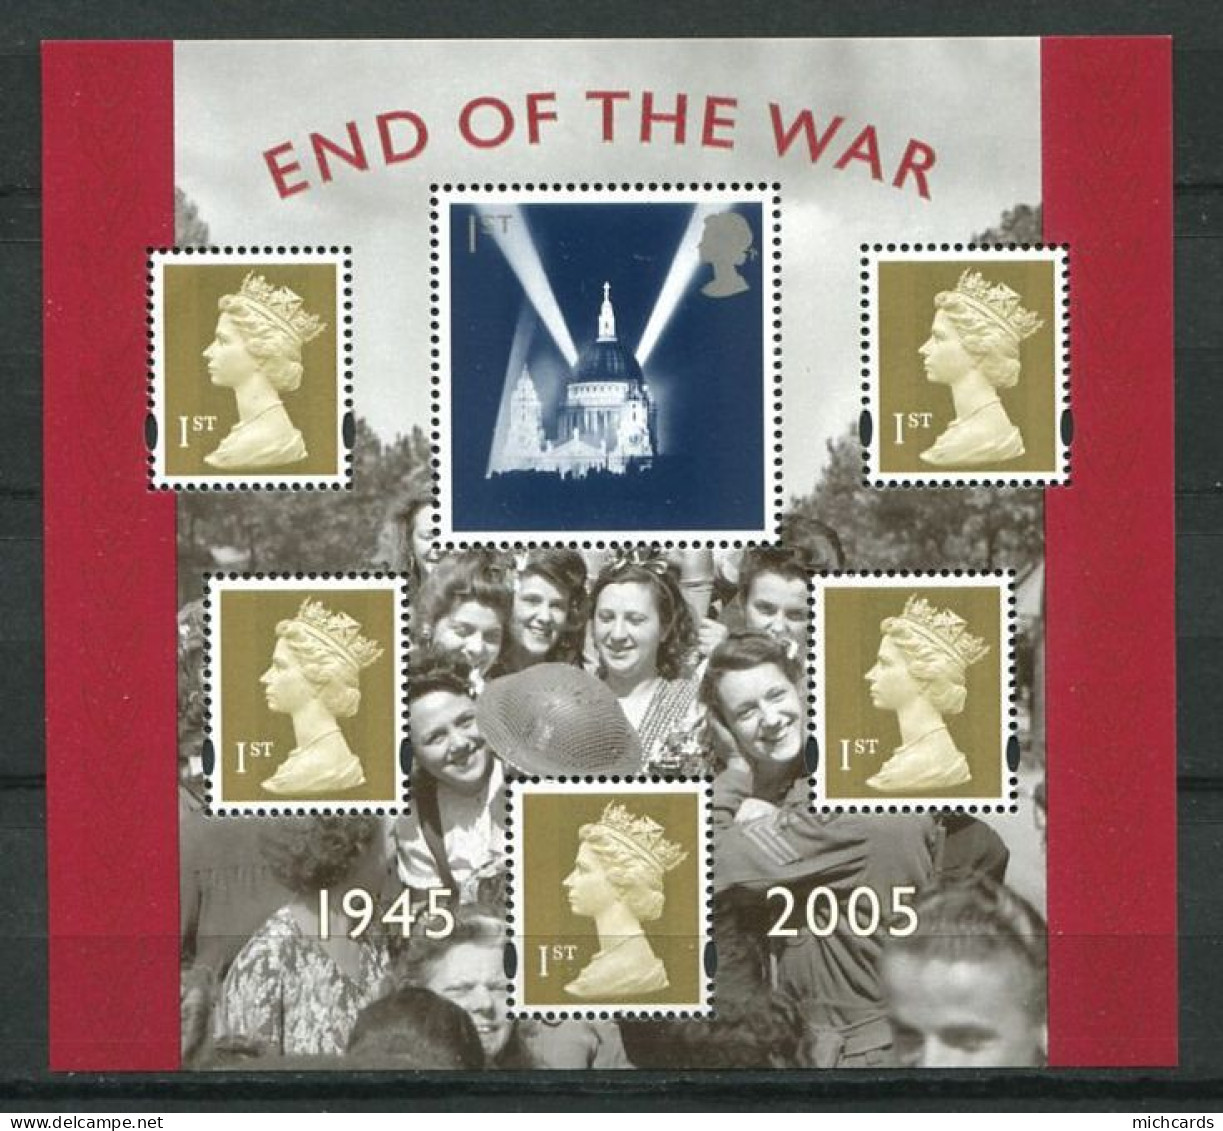 191 GRANDE BRETAGNE 2005 - Yvert BF 32 - Fin De La 2e Guerre Mondiale - Neuf ** (MNH) Sans Charniere - Neufs